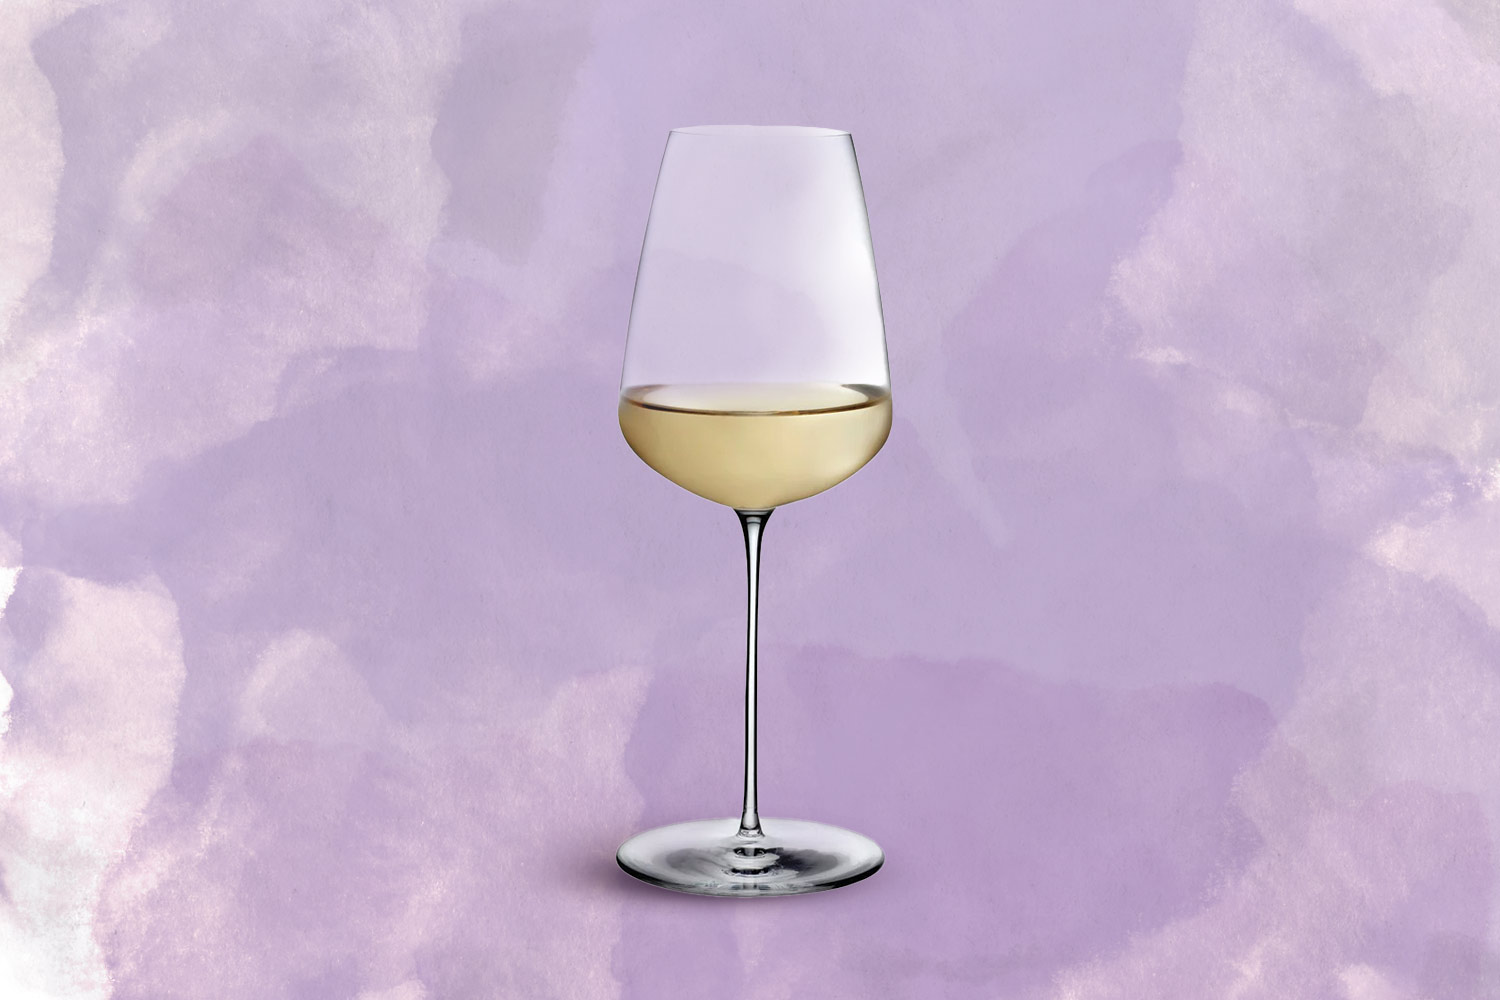 Stem Zero Set of 2 Delicate White Wine Glasses